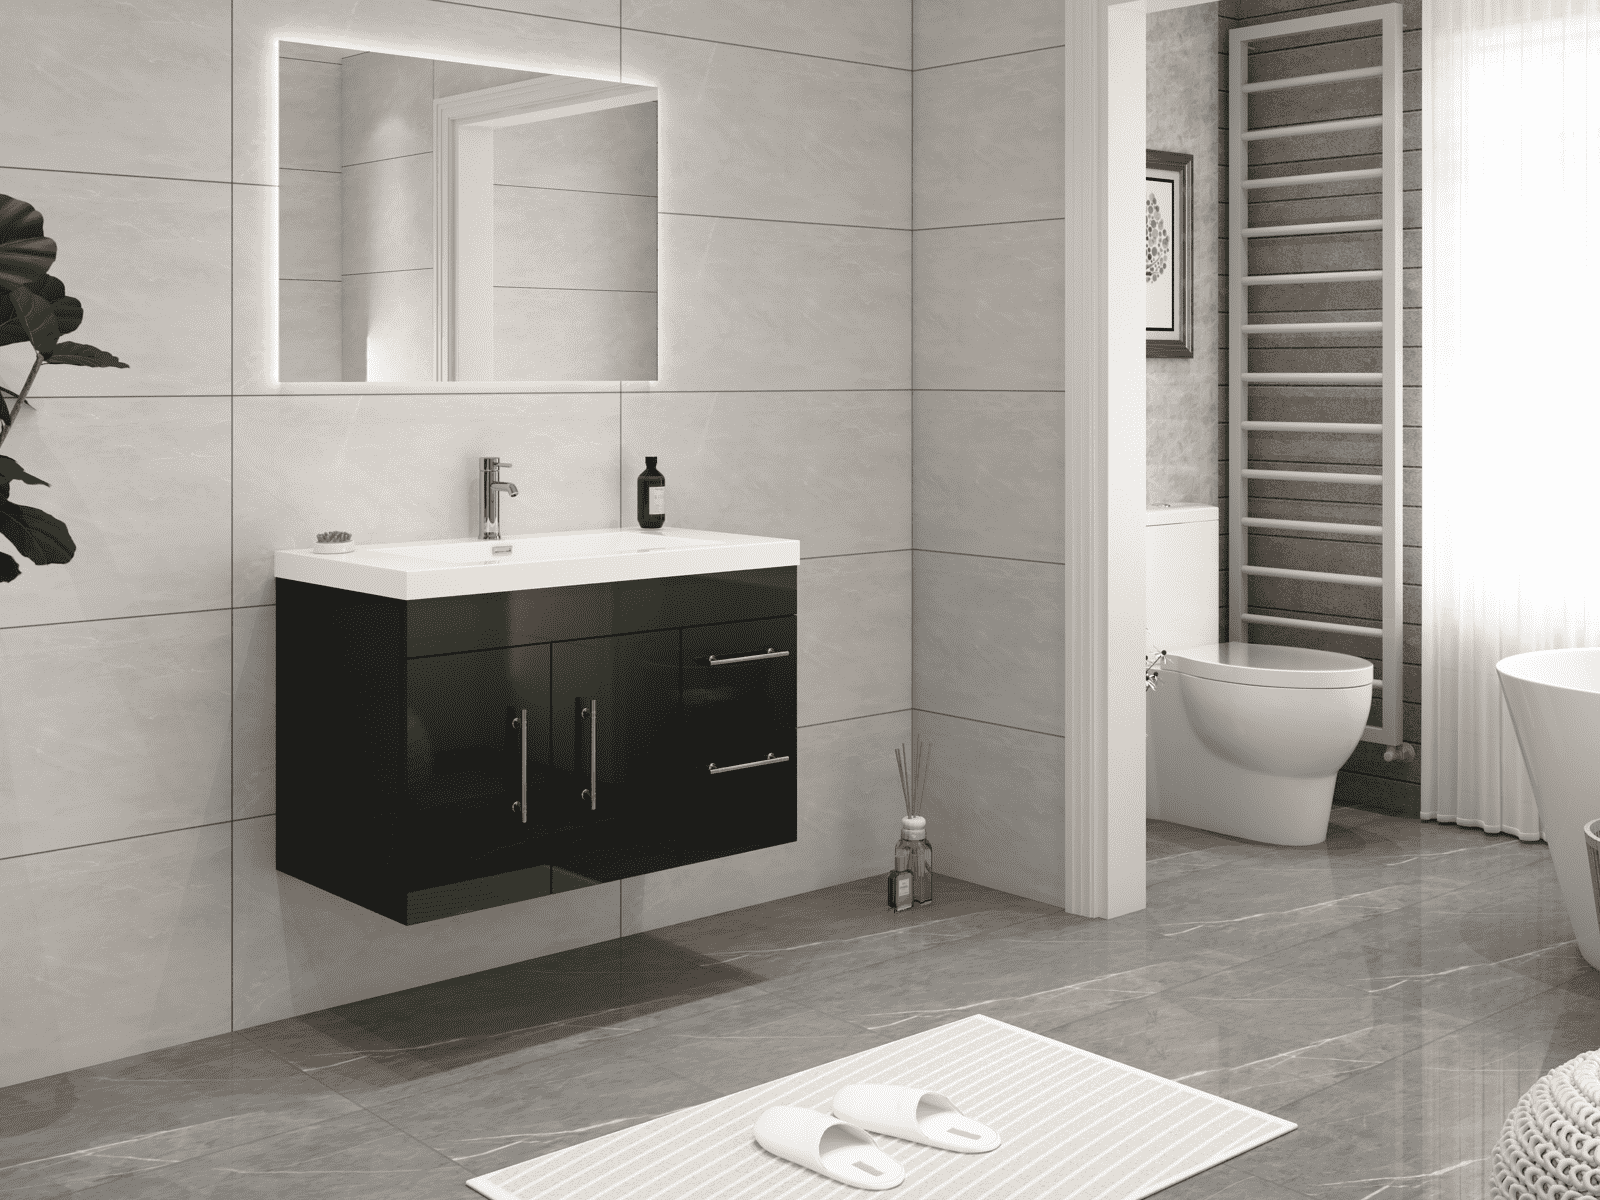 Elsa 36" Wall-Mounted Floating Bathroom Vanity with Reinforced Acrylic Sink in Gloss Black | Better Vanity